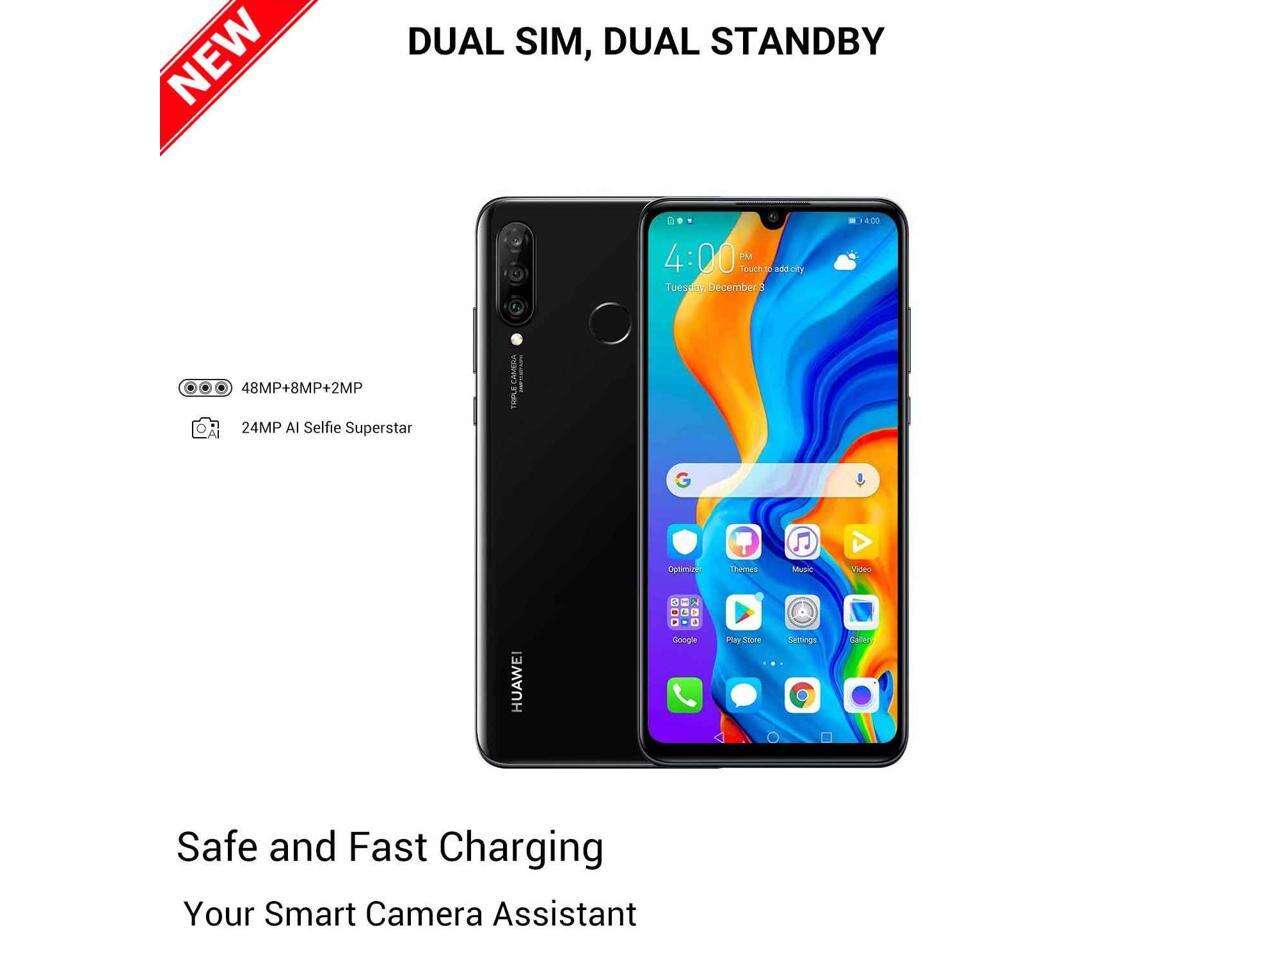 Huawei P30 Lite 128GB MAR-LX2 Dual SIM GSM Factory Unlocked 4G LTE 6.15\" Display 6GB RAM Kirin 710 Octa Core, AI Triple Camera,32MP Selfie Camera Smartphone - Midnight Black - International Version